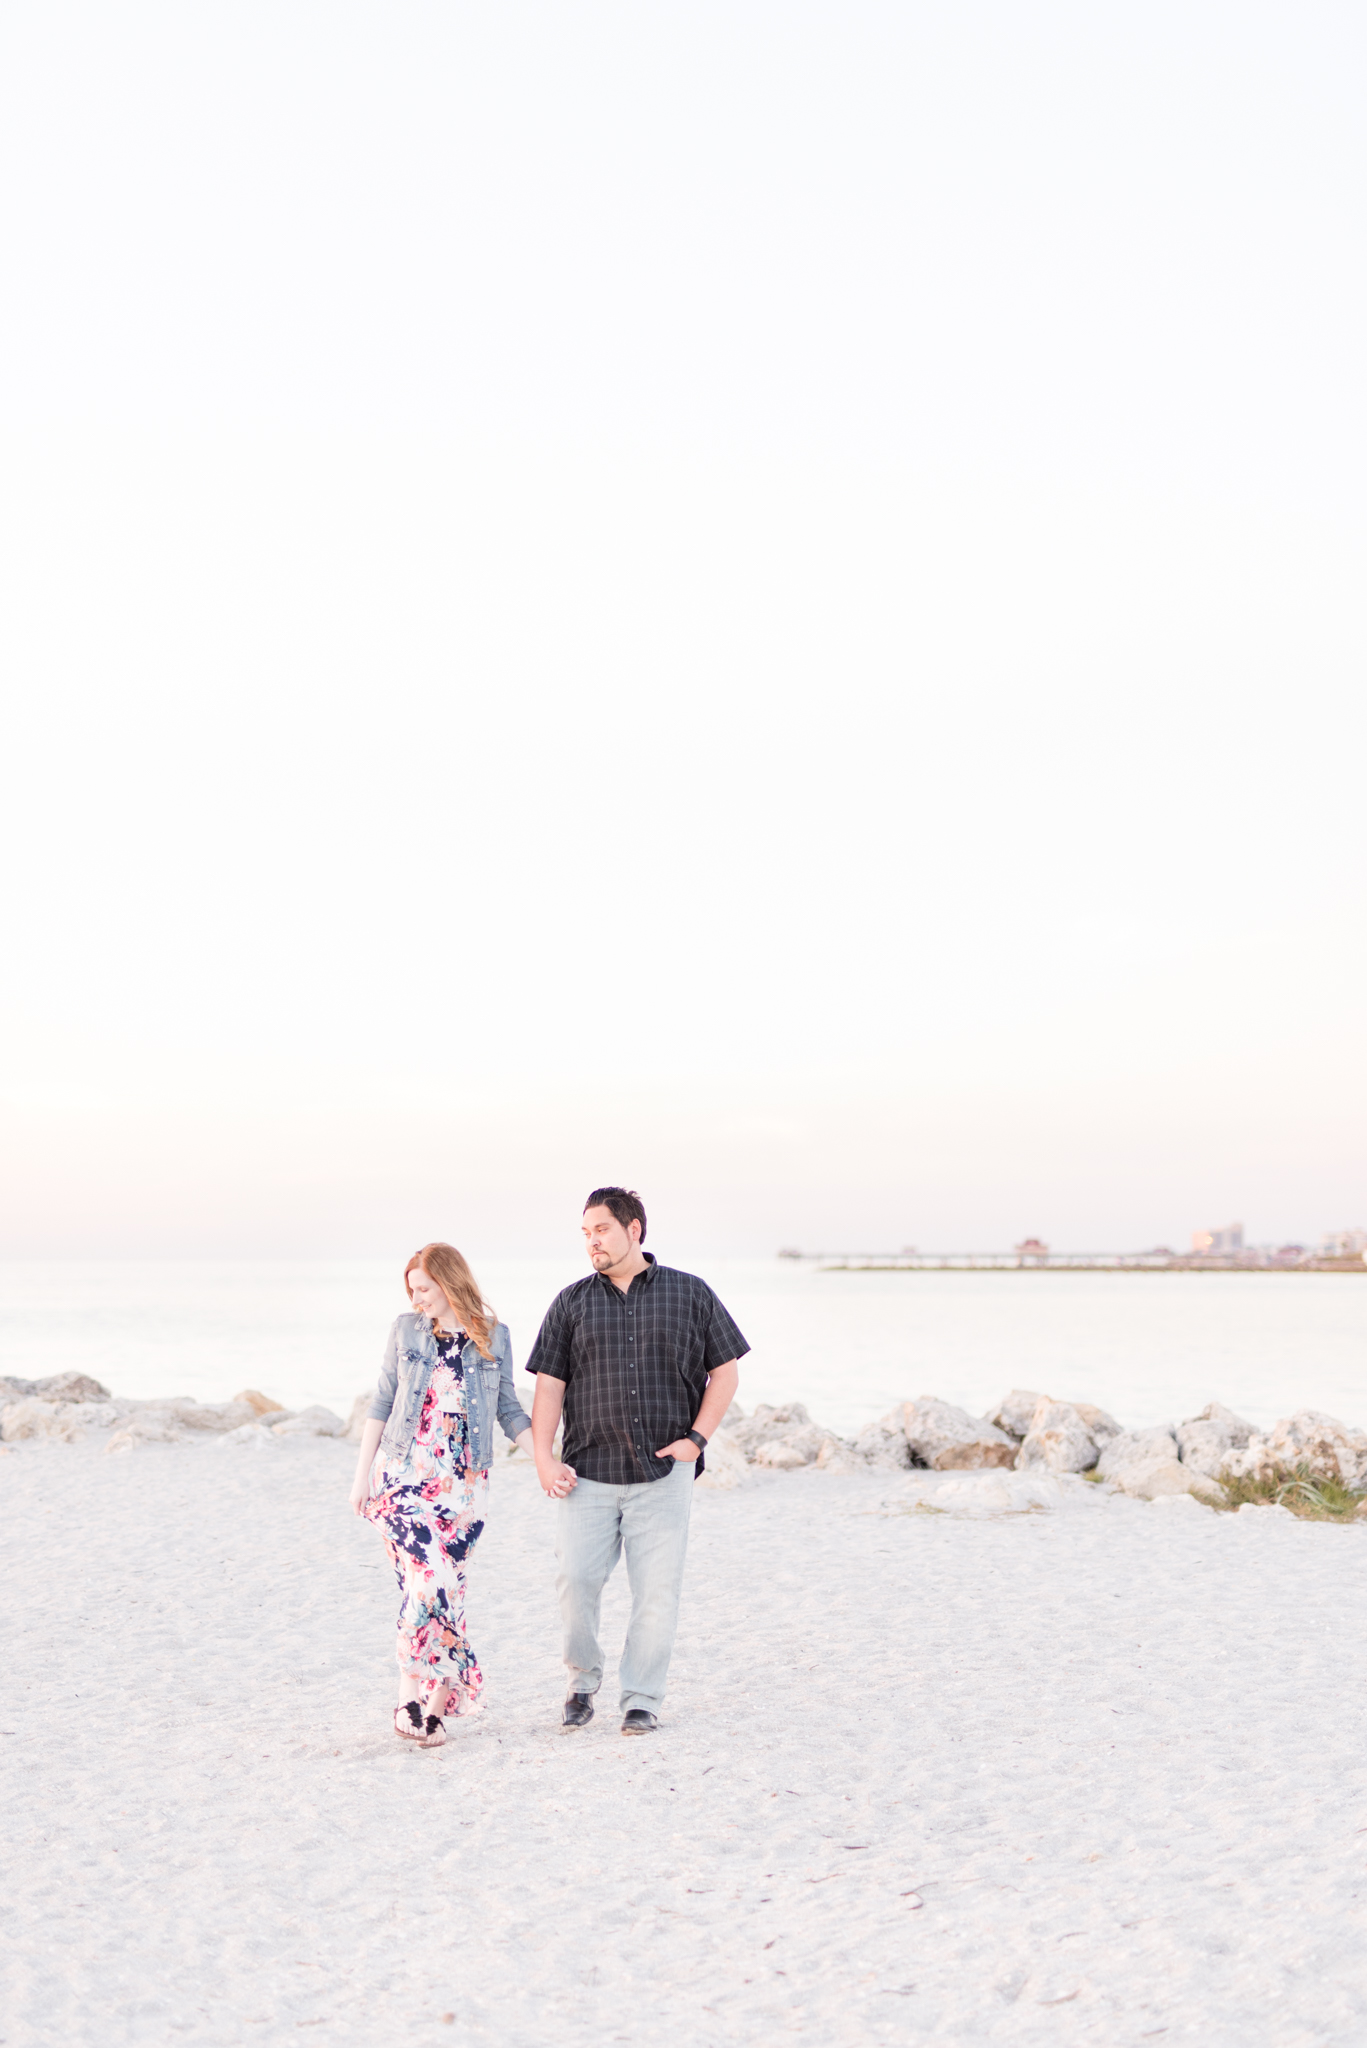 Engaged couple walk along beach at sunset.